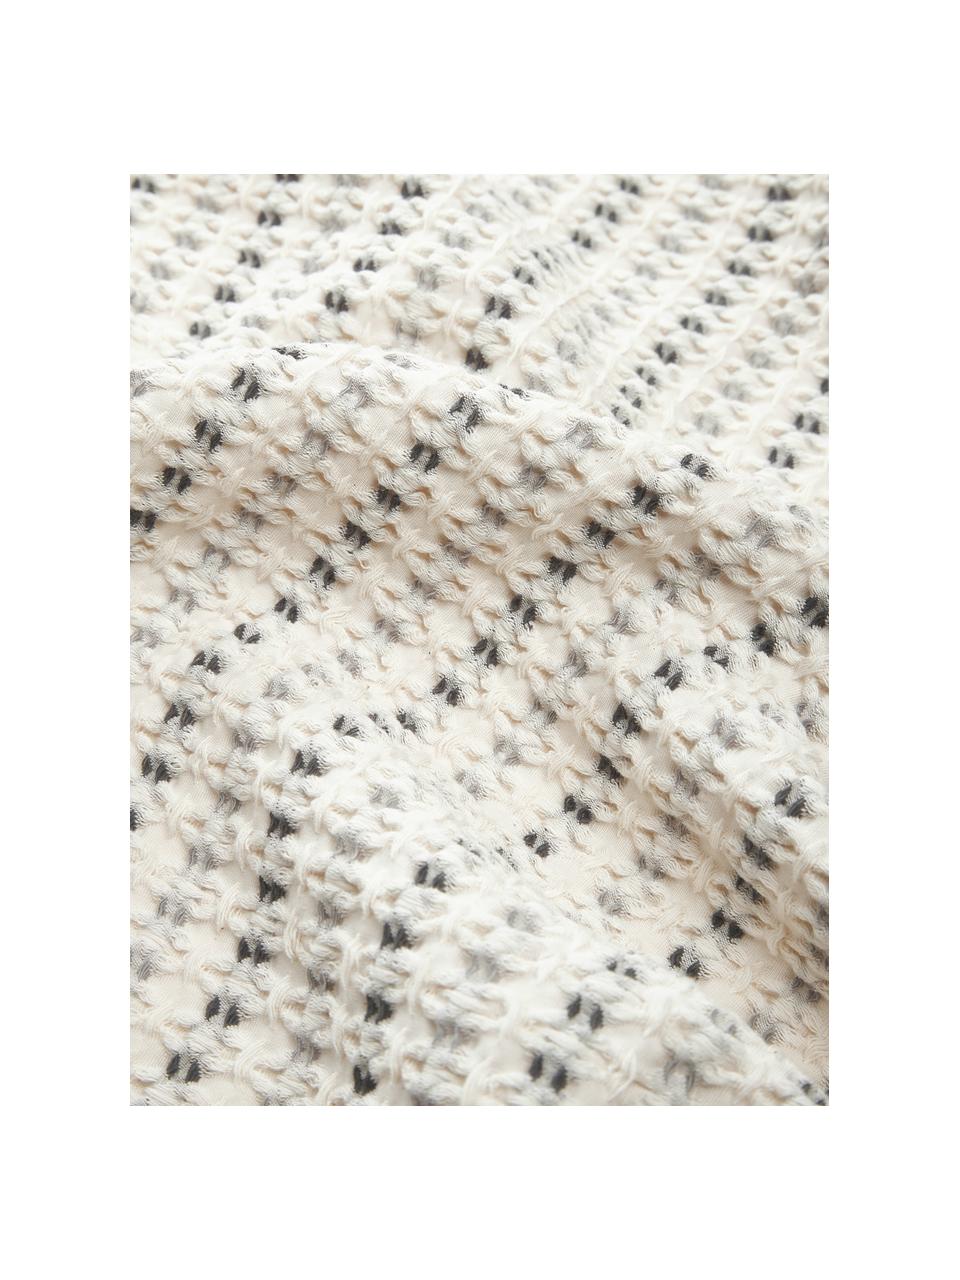 Coperta in cotone a nido d'ape Kimber, 100% cotone, Bianco crema, tonalità grigie, Larg. 130 x Lung. 170 cm